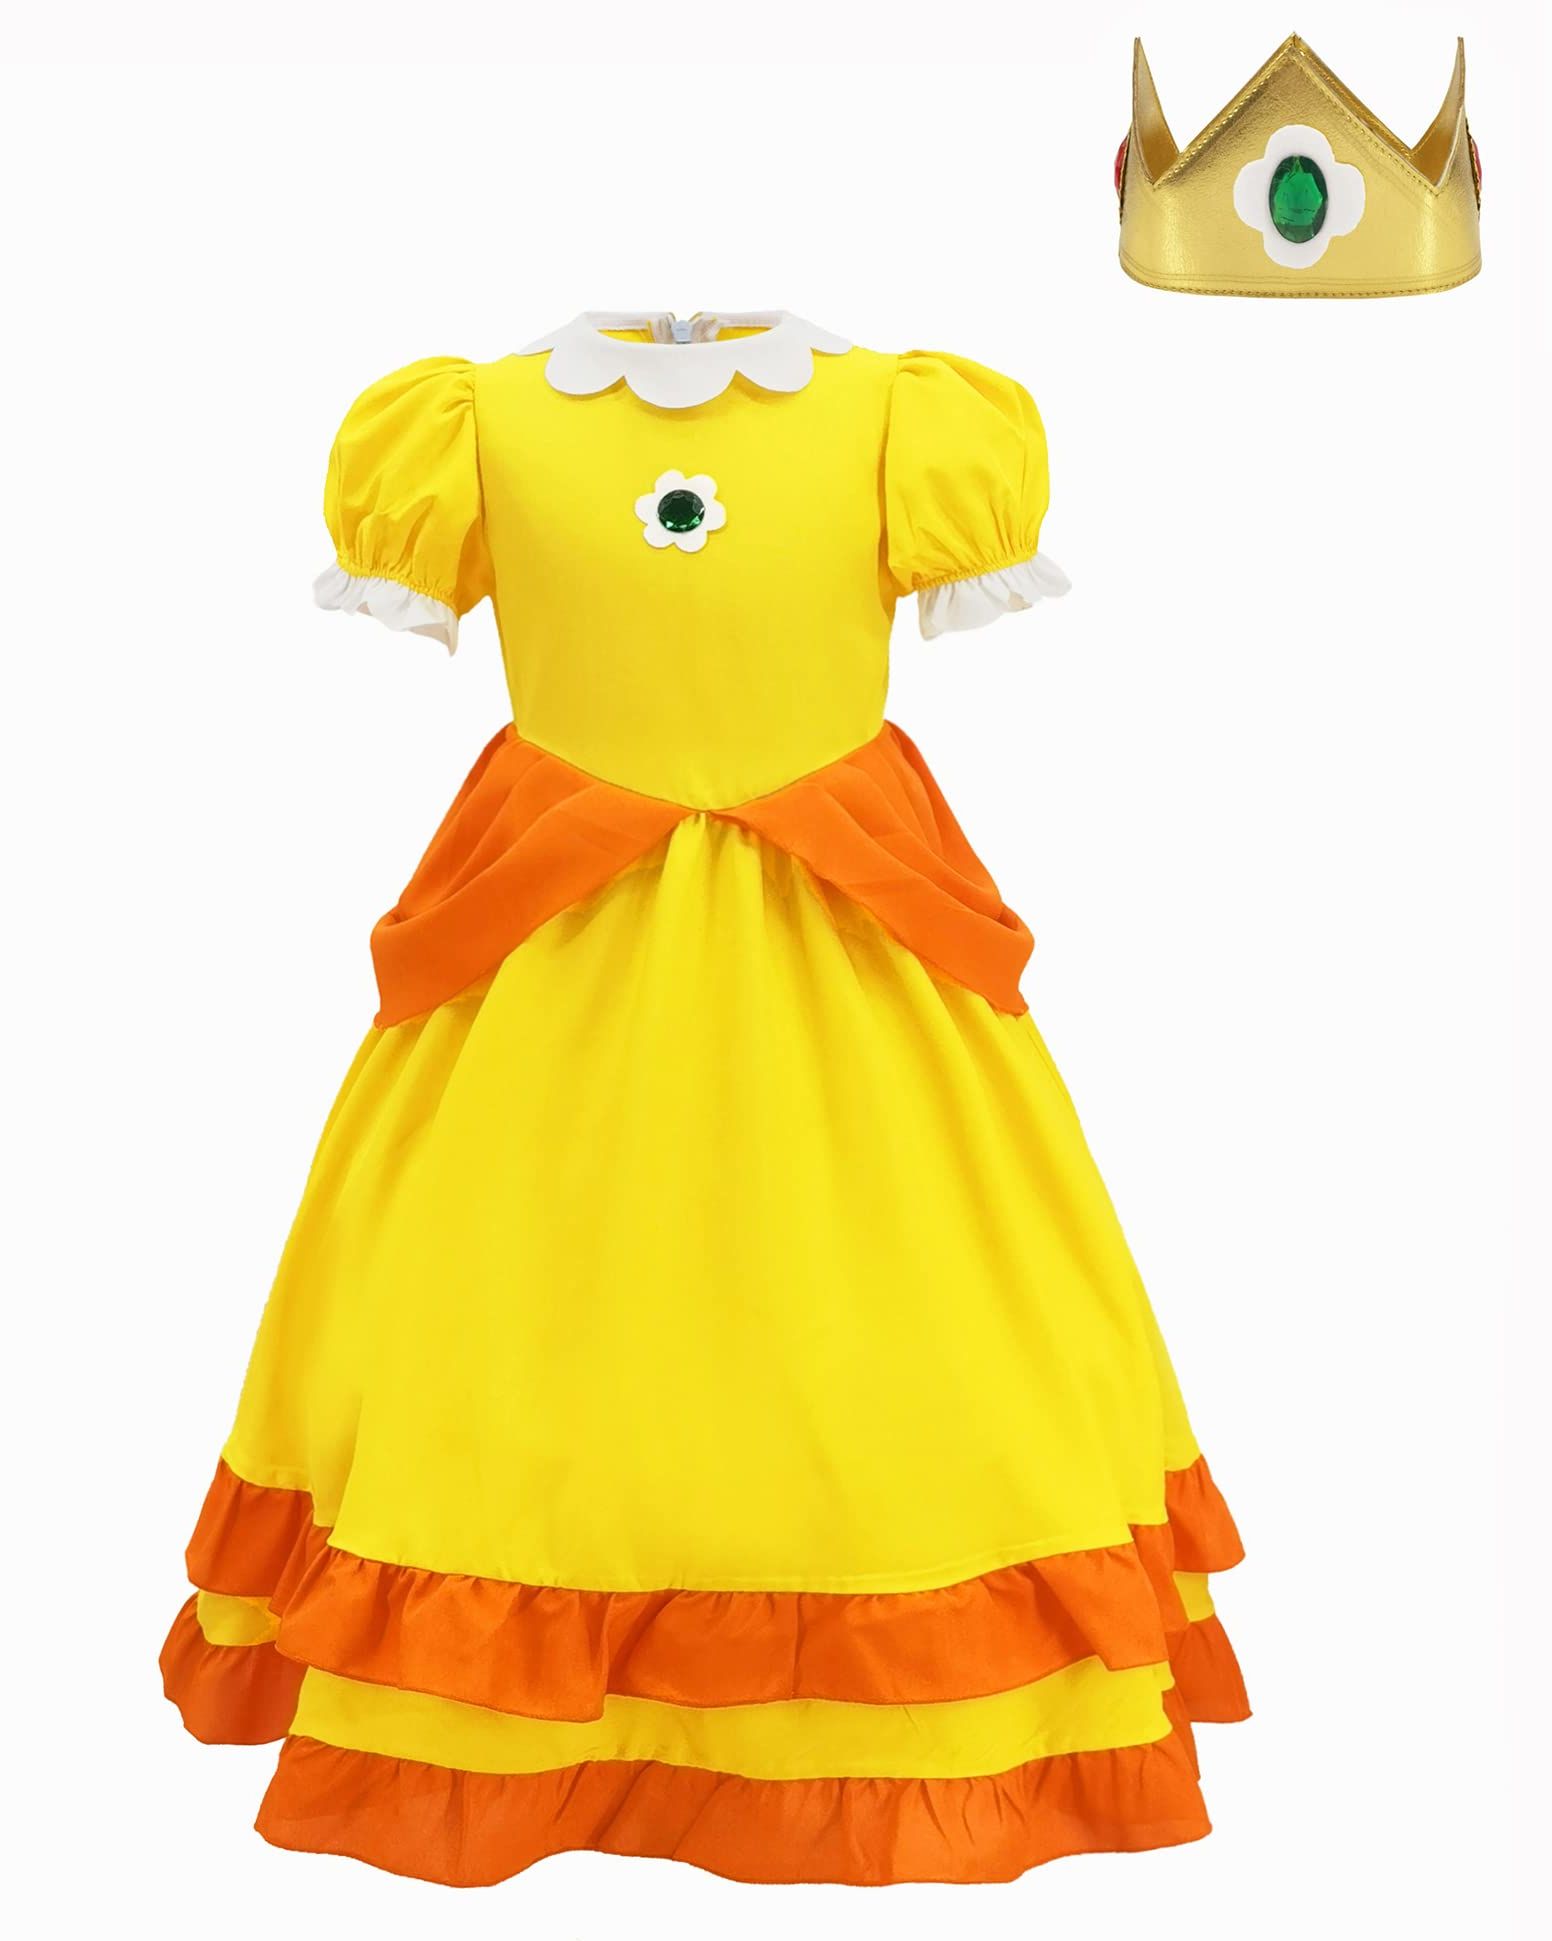 princess daisy costumes